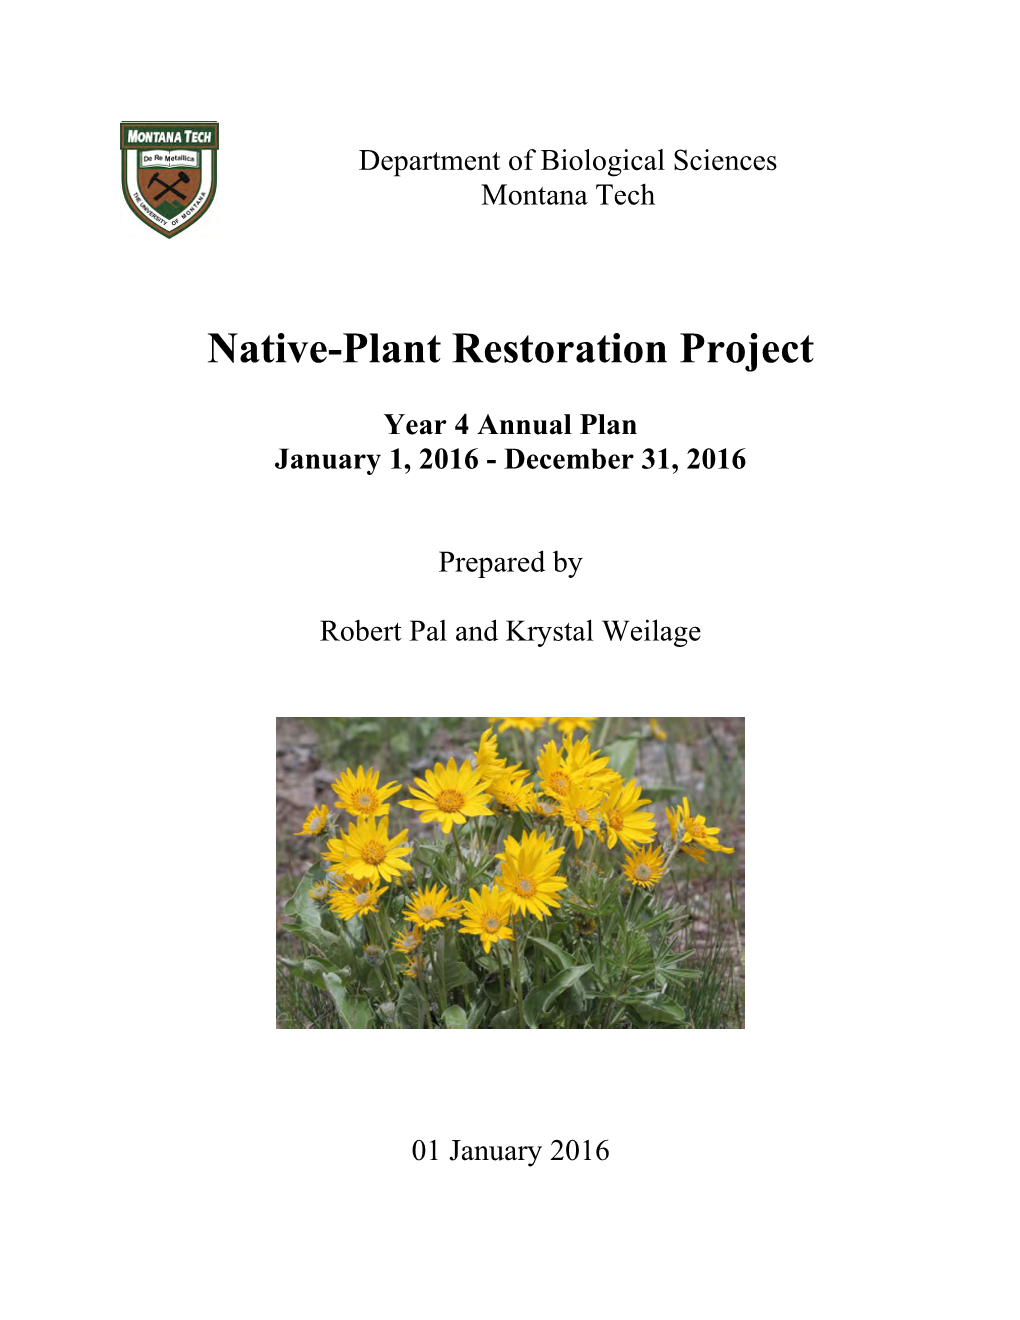 Native-Plant Restoration Project